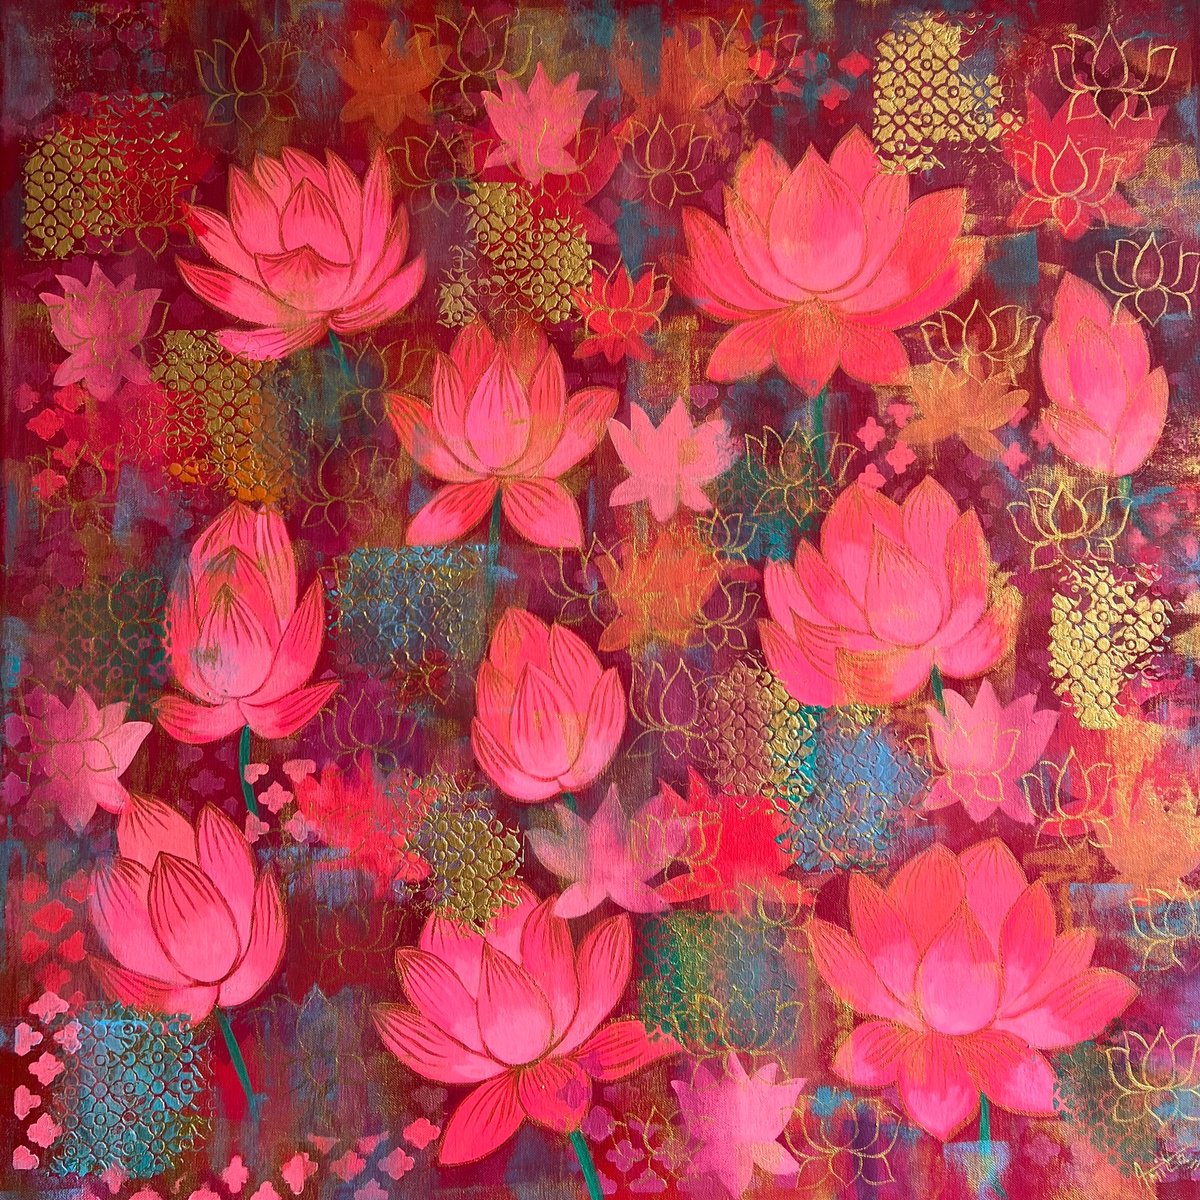 Divine Lotus by Amita Dand